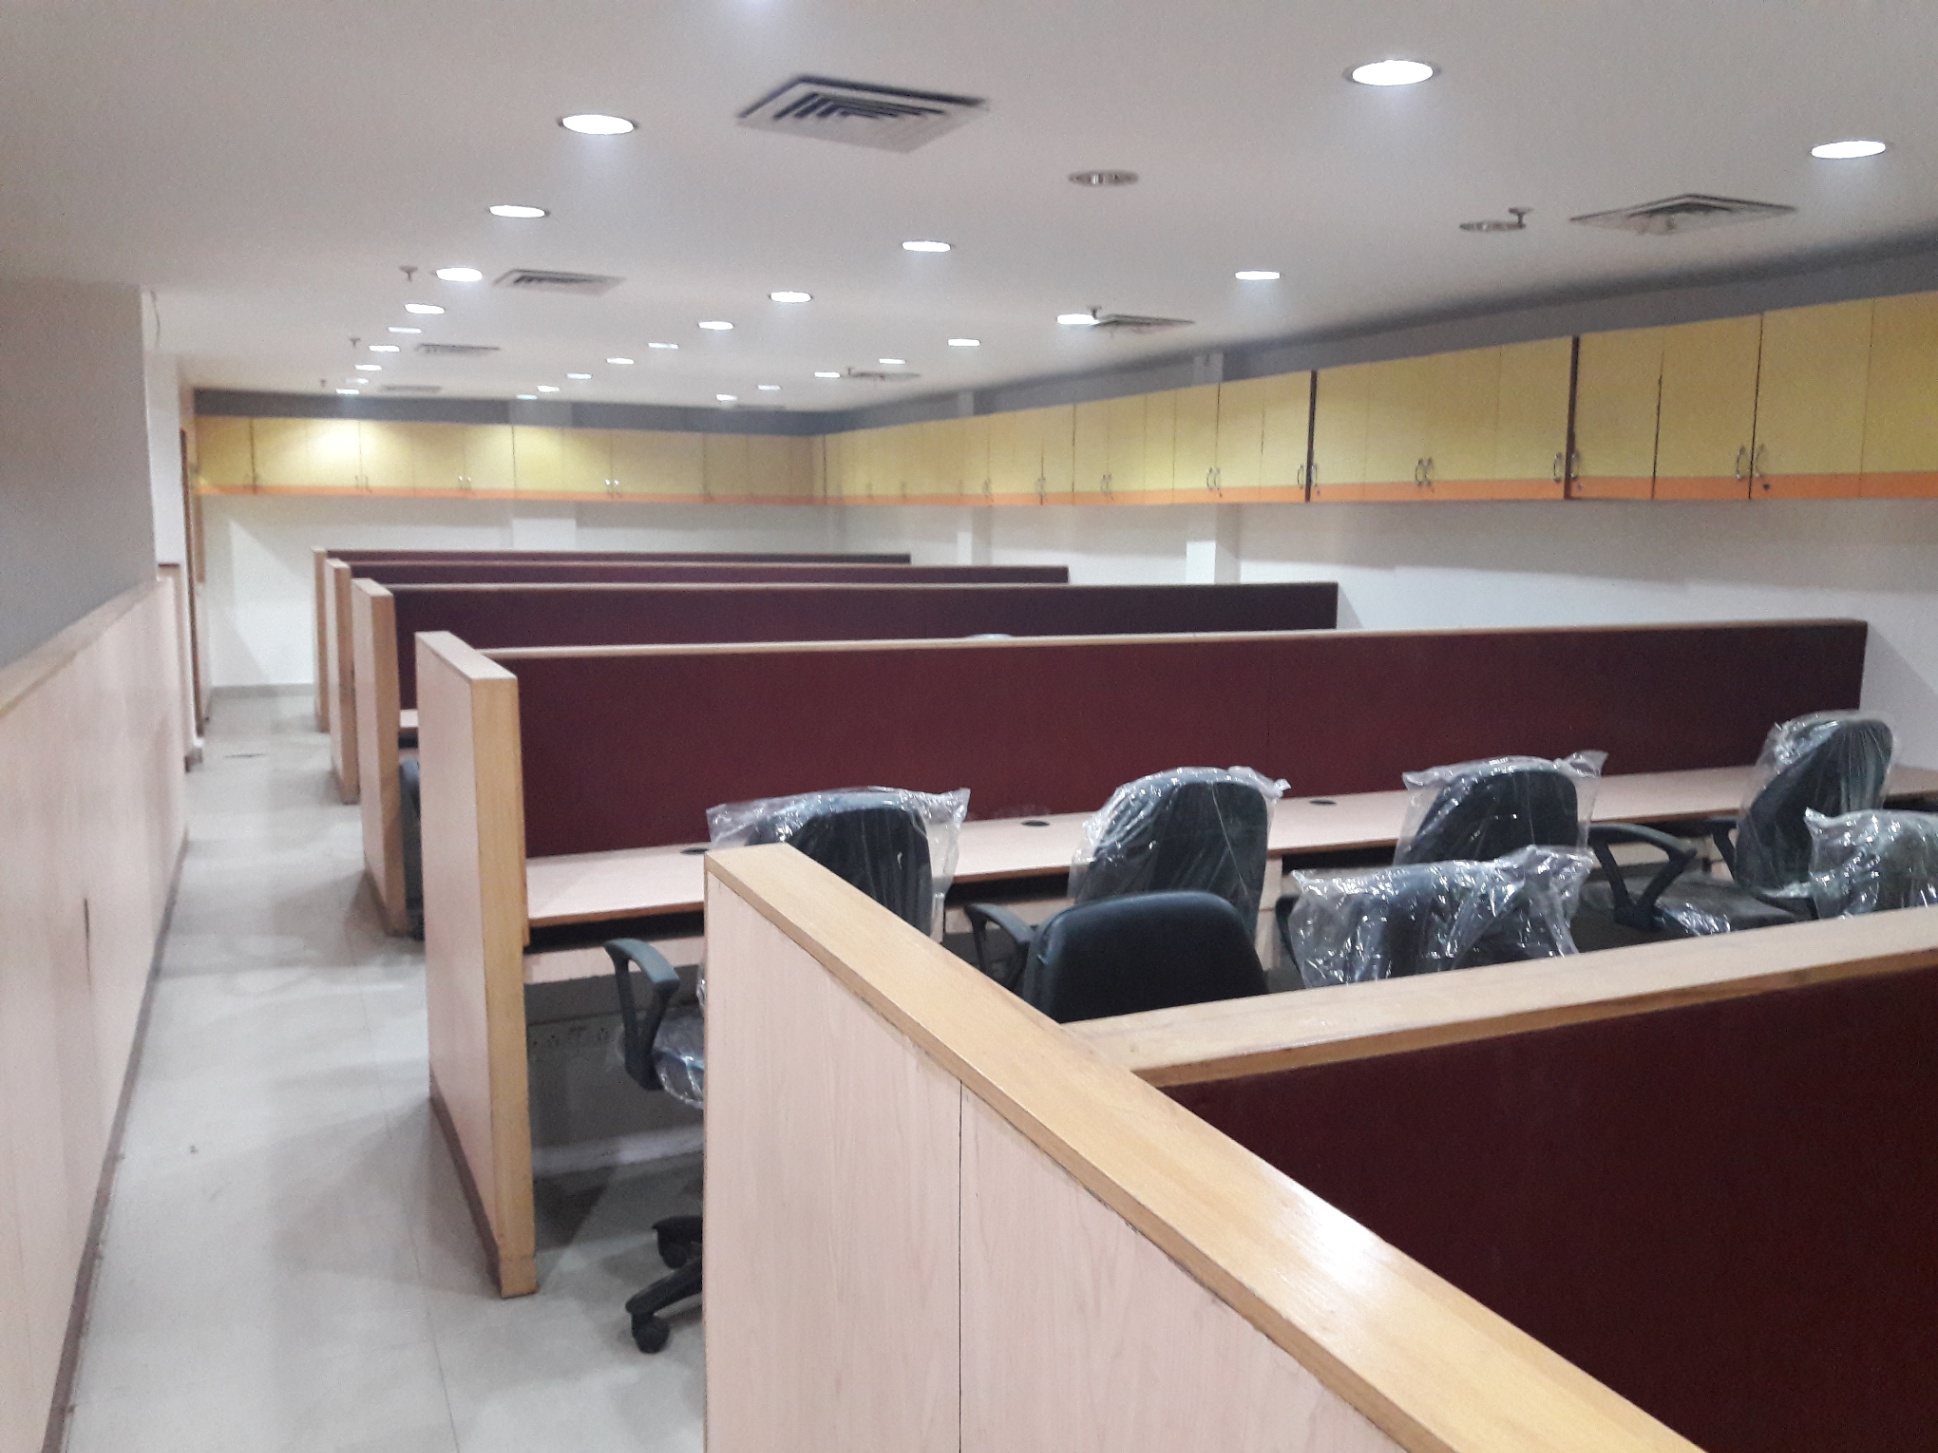 Rent Office/ Shop, 8000 sq ft carpet area, Furnished for rent @Sector 6 Noida